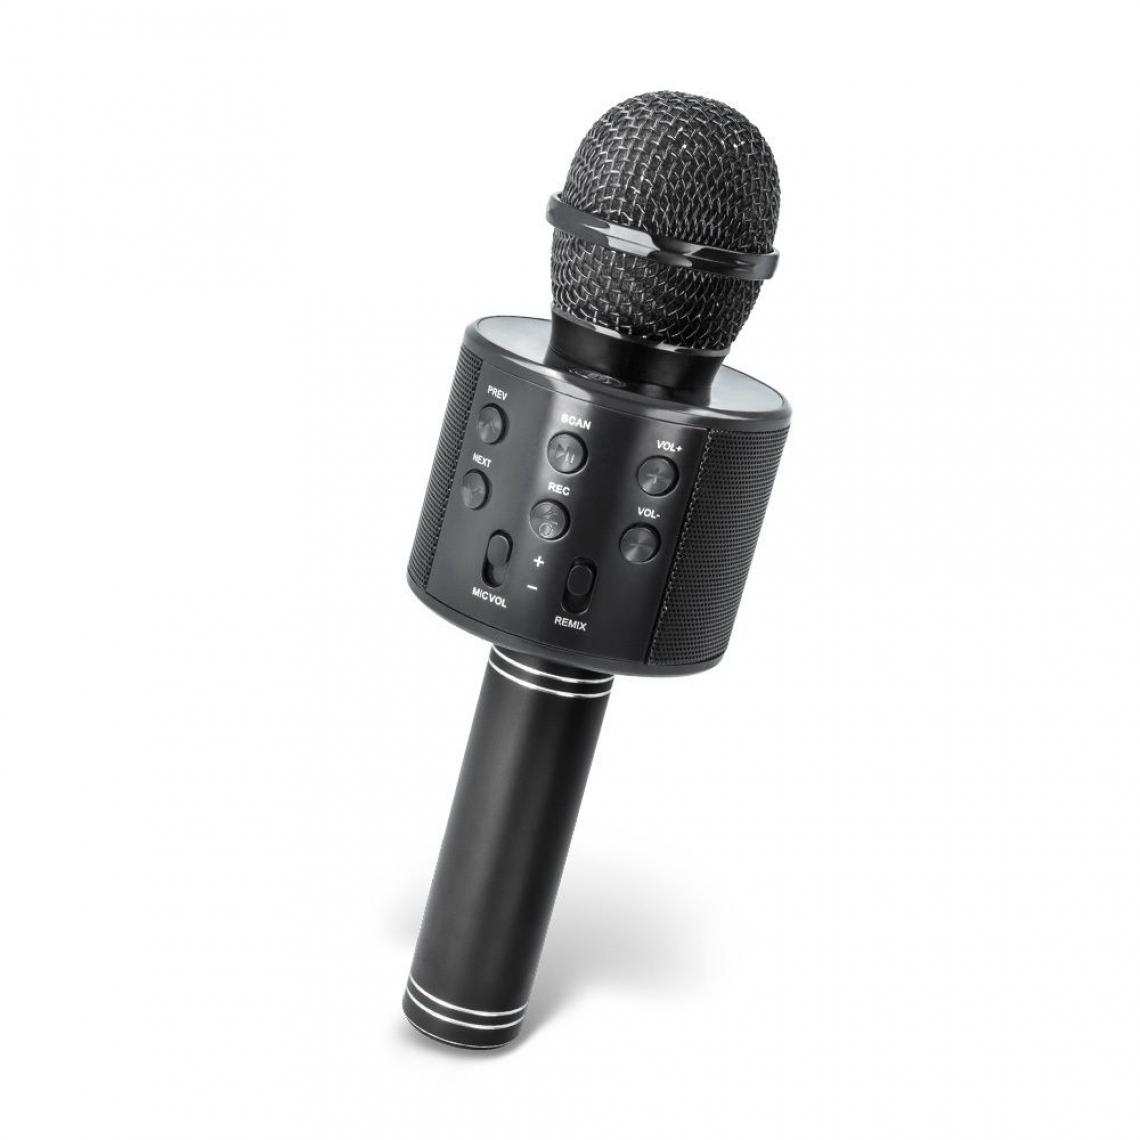 Ozzzo - Microphone Karaoke bluetooth haut parleur ozzzo noir pour Samsung Galaxy Tab A 7.0" (2016) - Autres accessoires smartphone